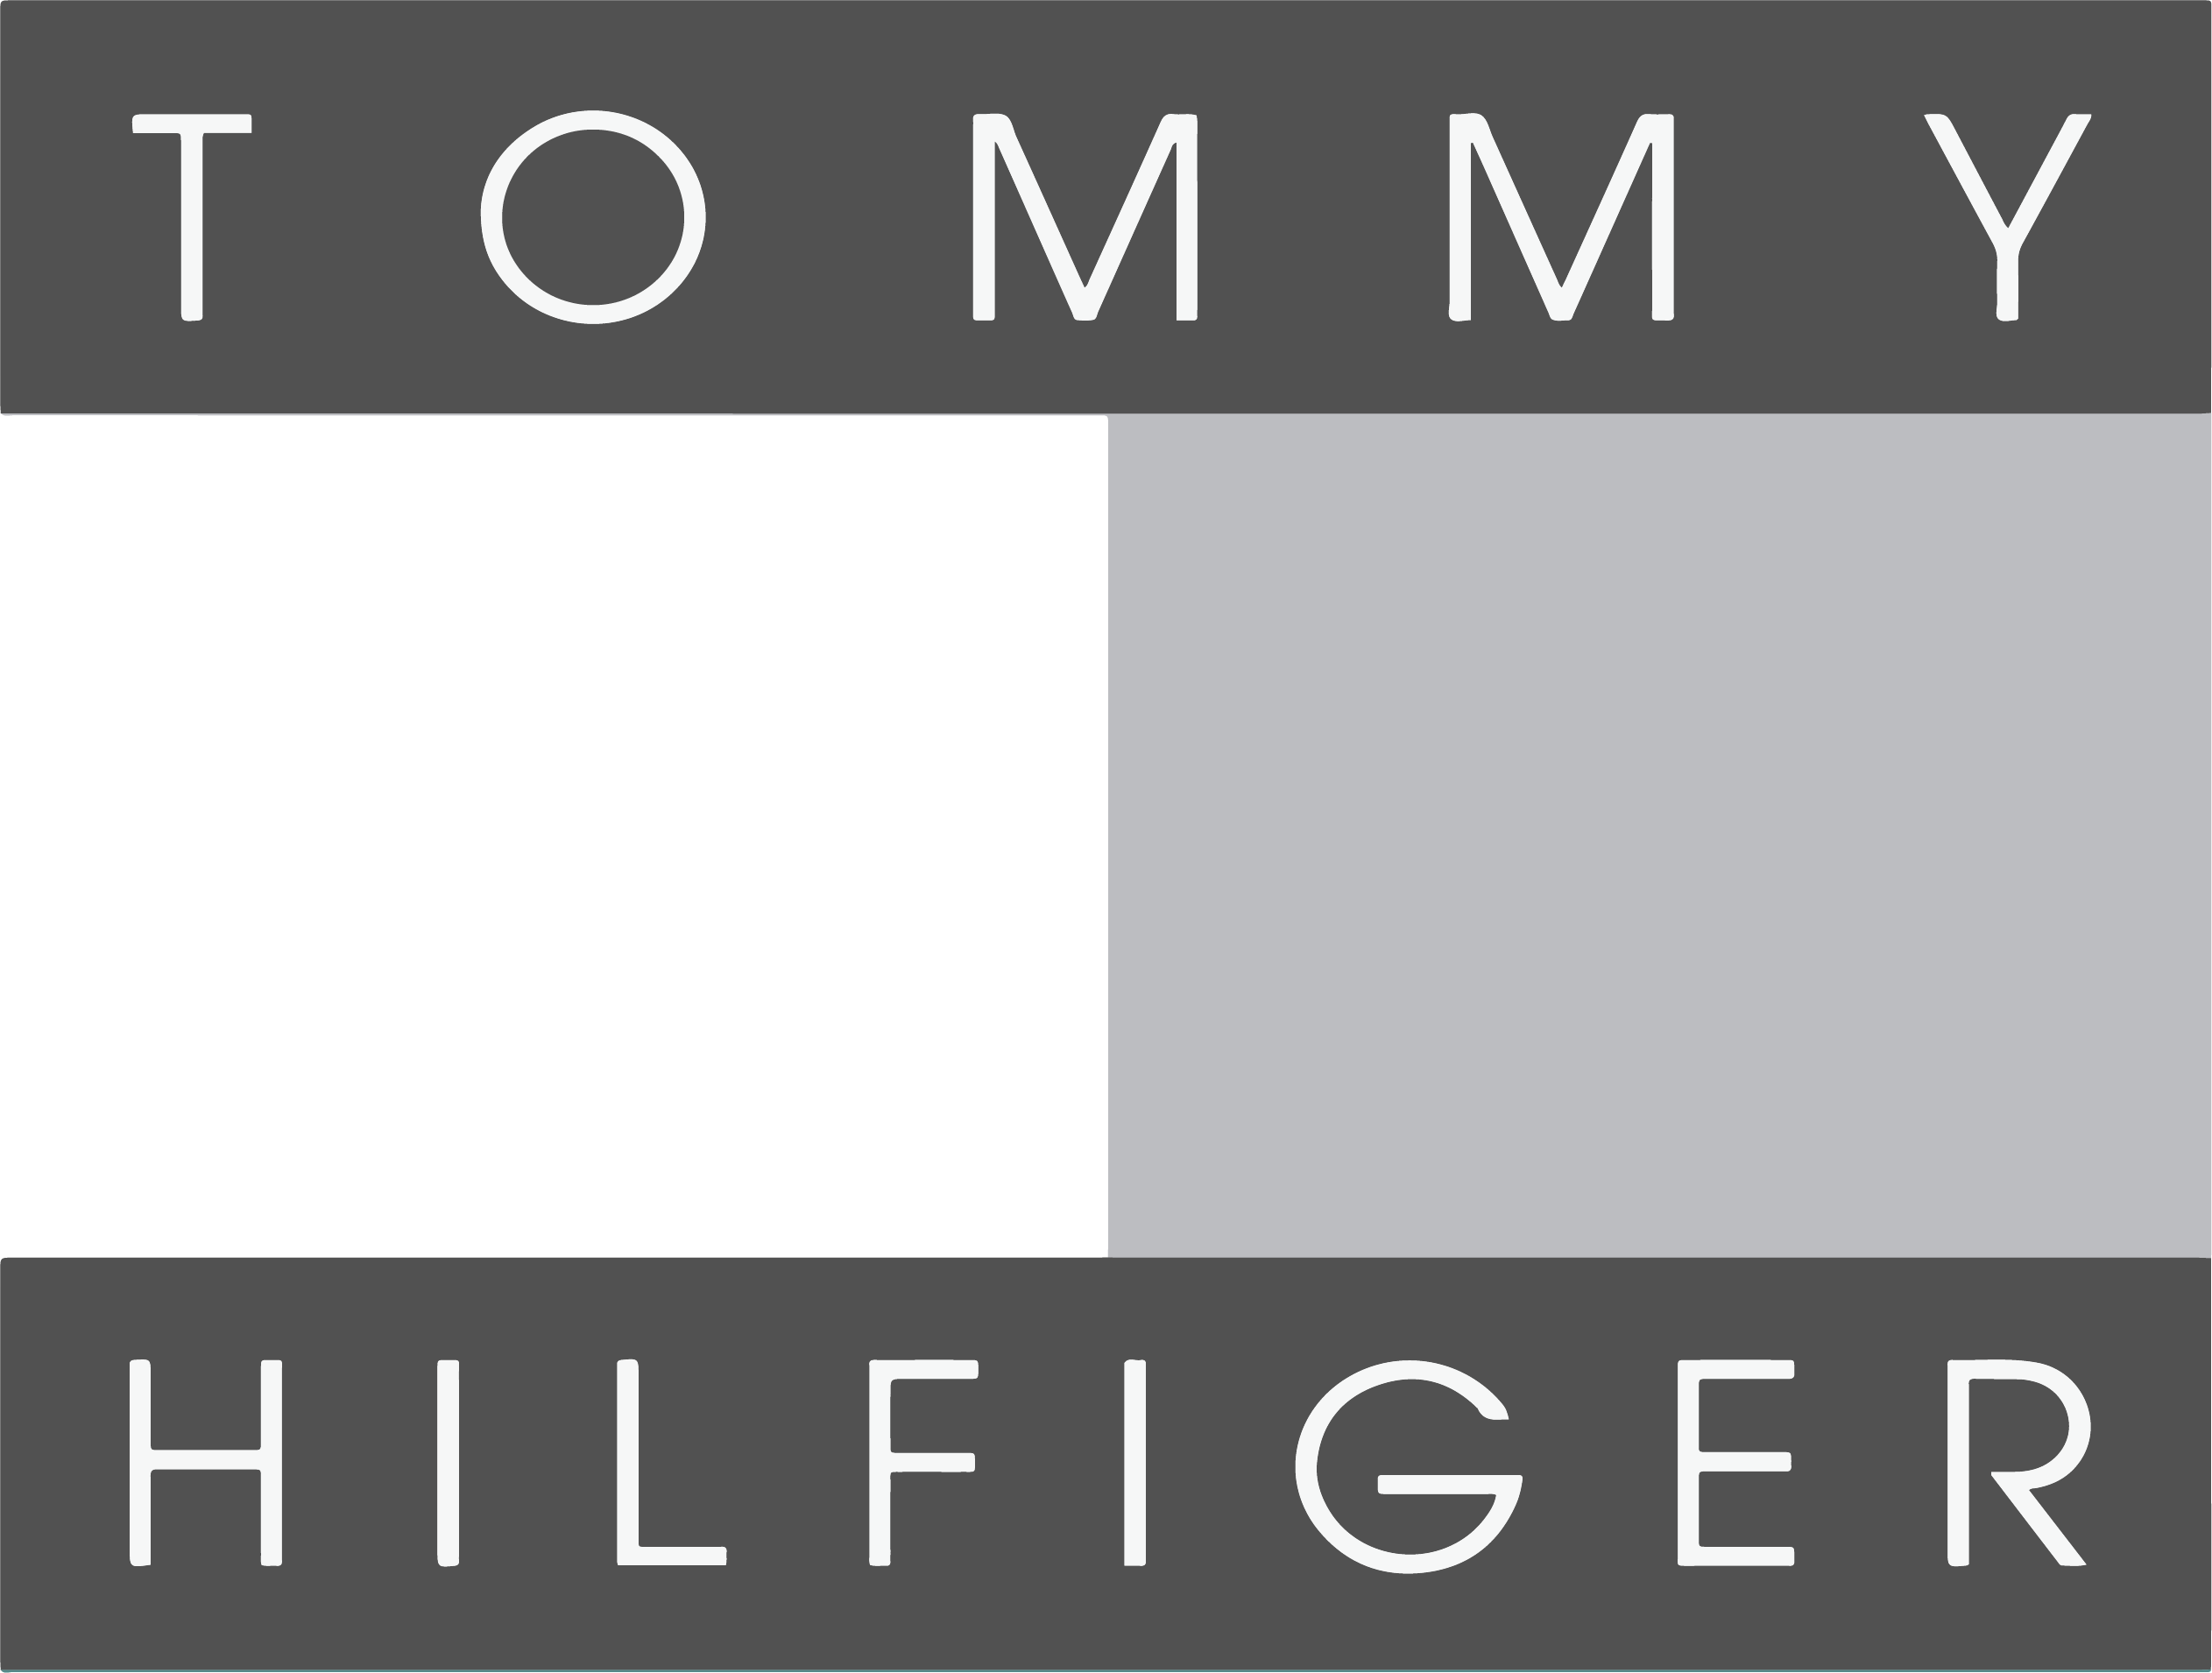 TOMY HILFIGER logo PLOMO